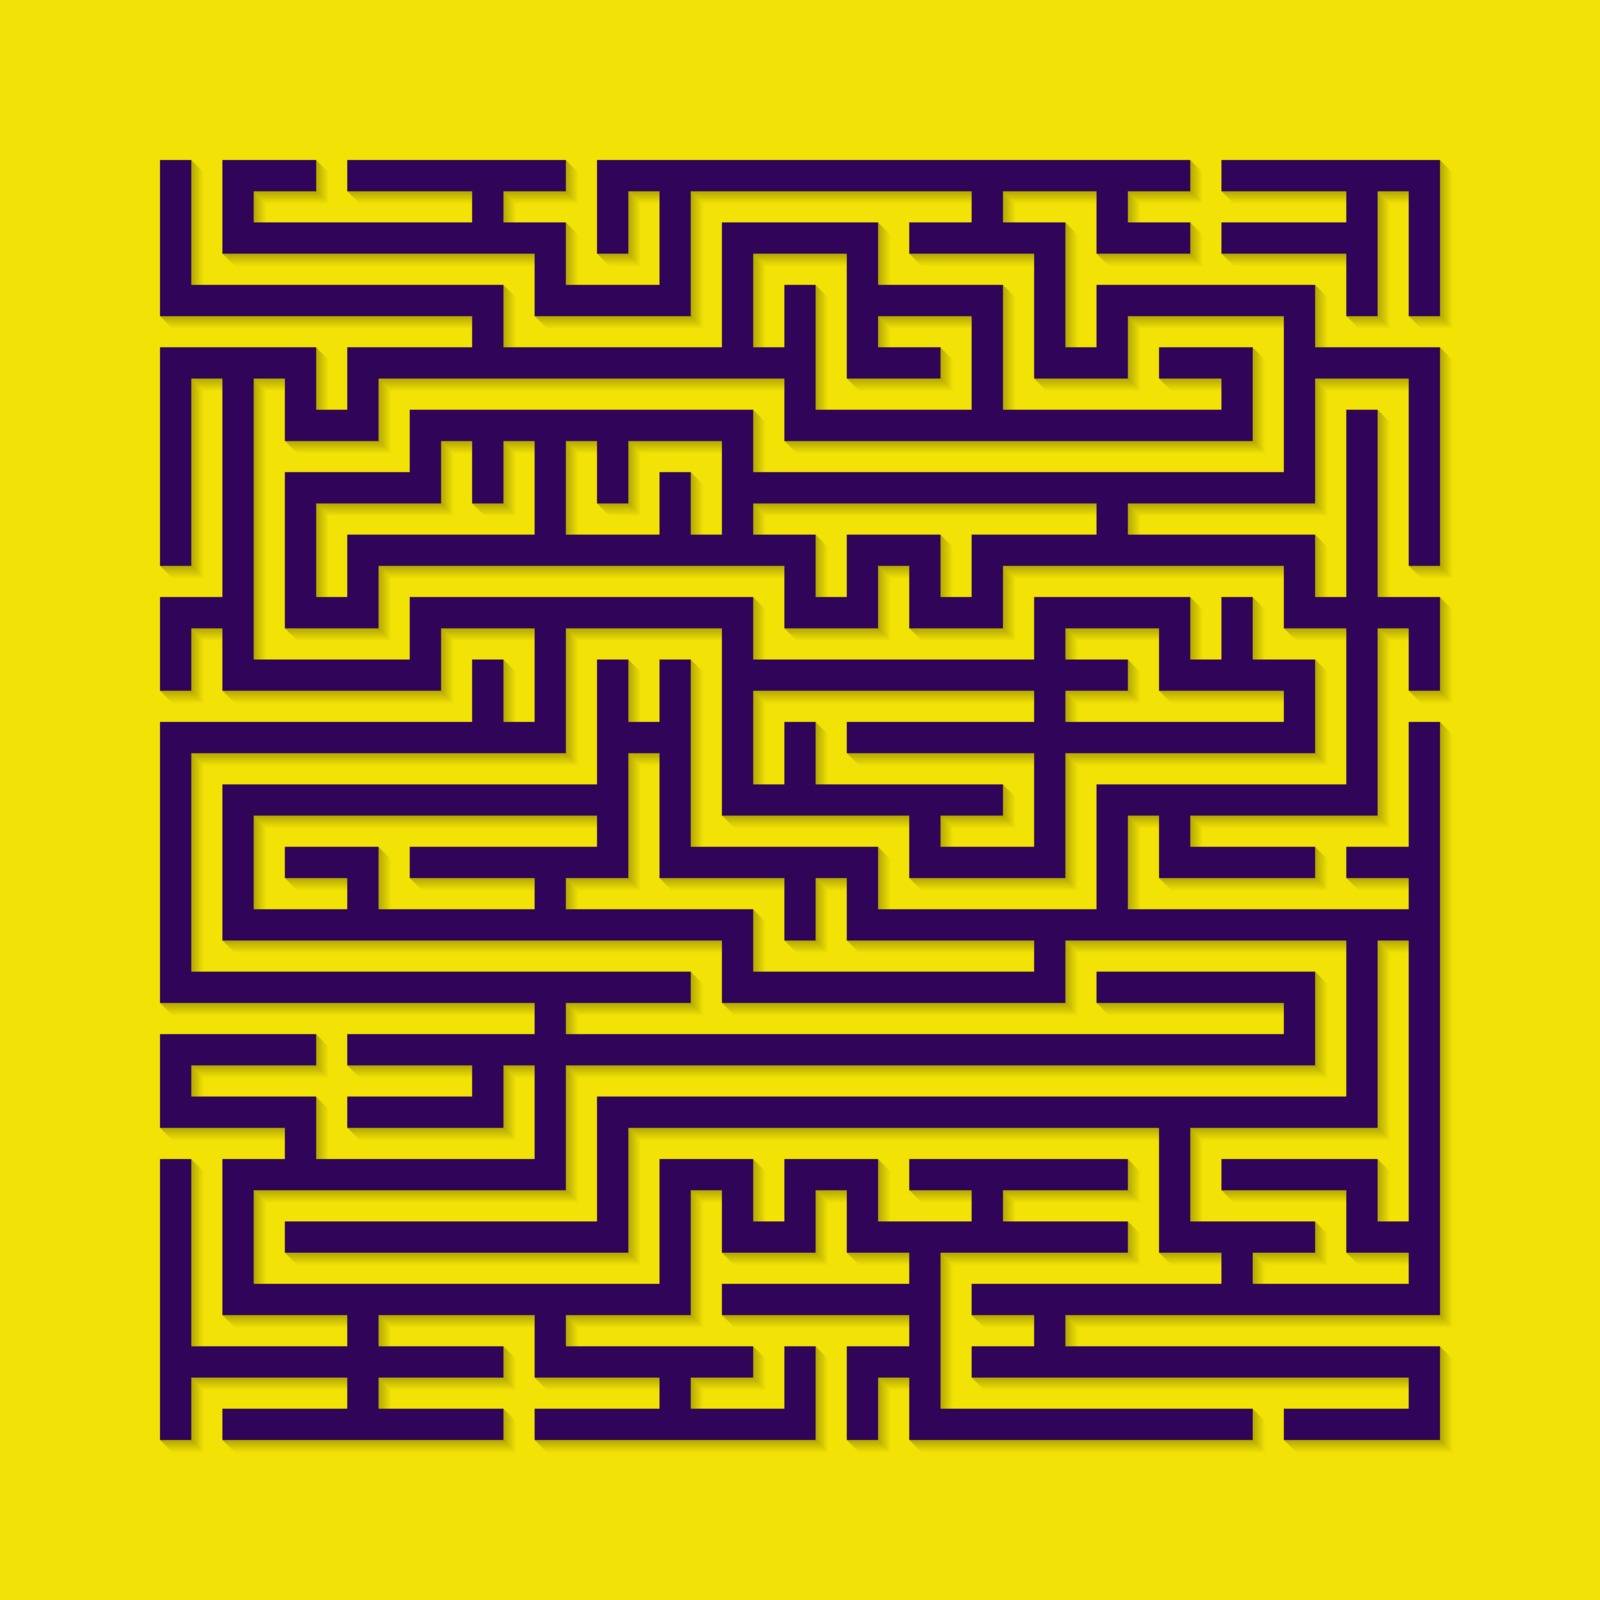 Labyrinth maze game, Labyrinth shape design element. by shaadjutt36